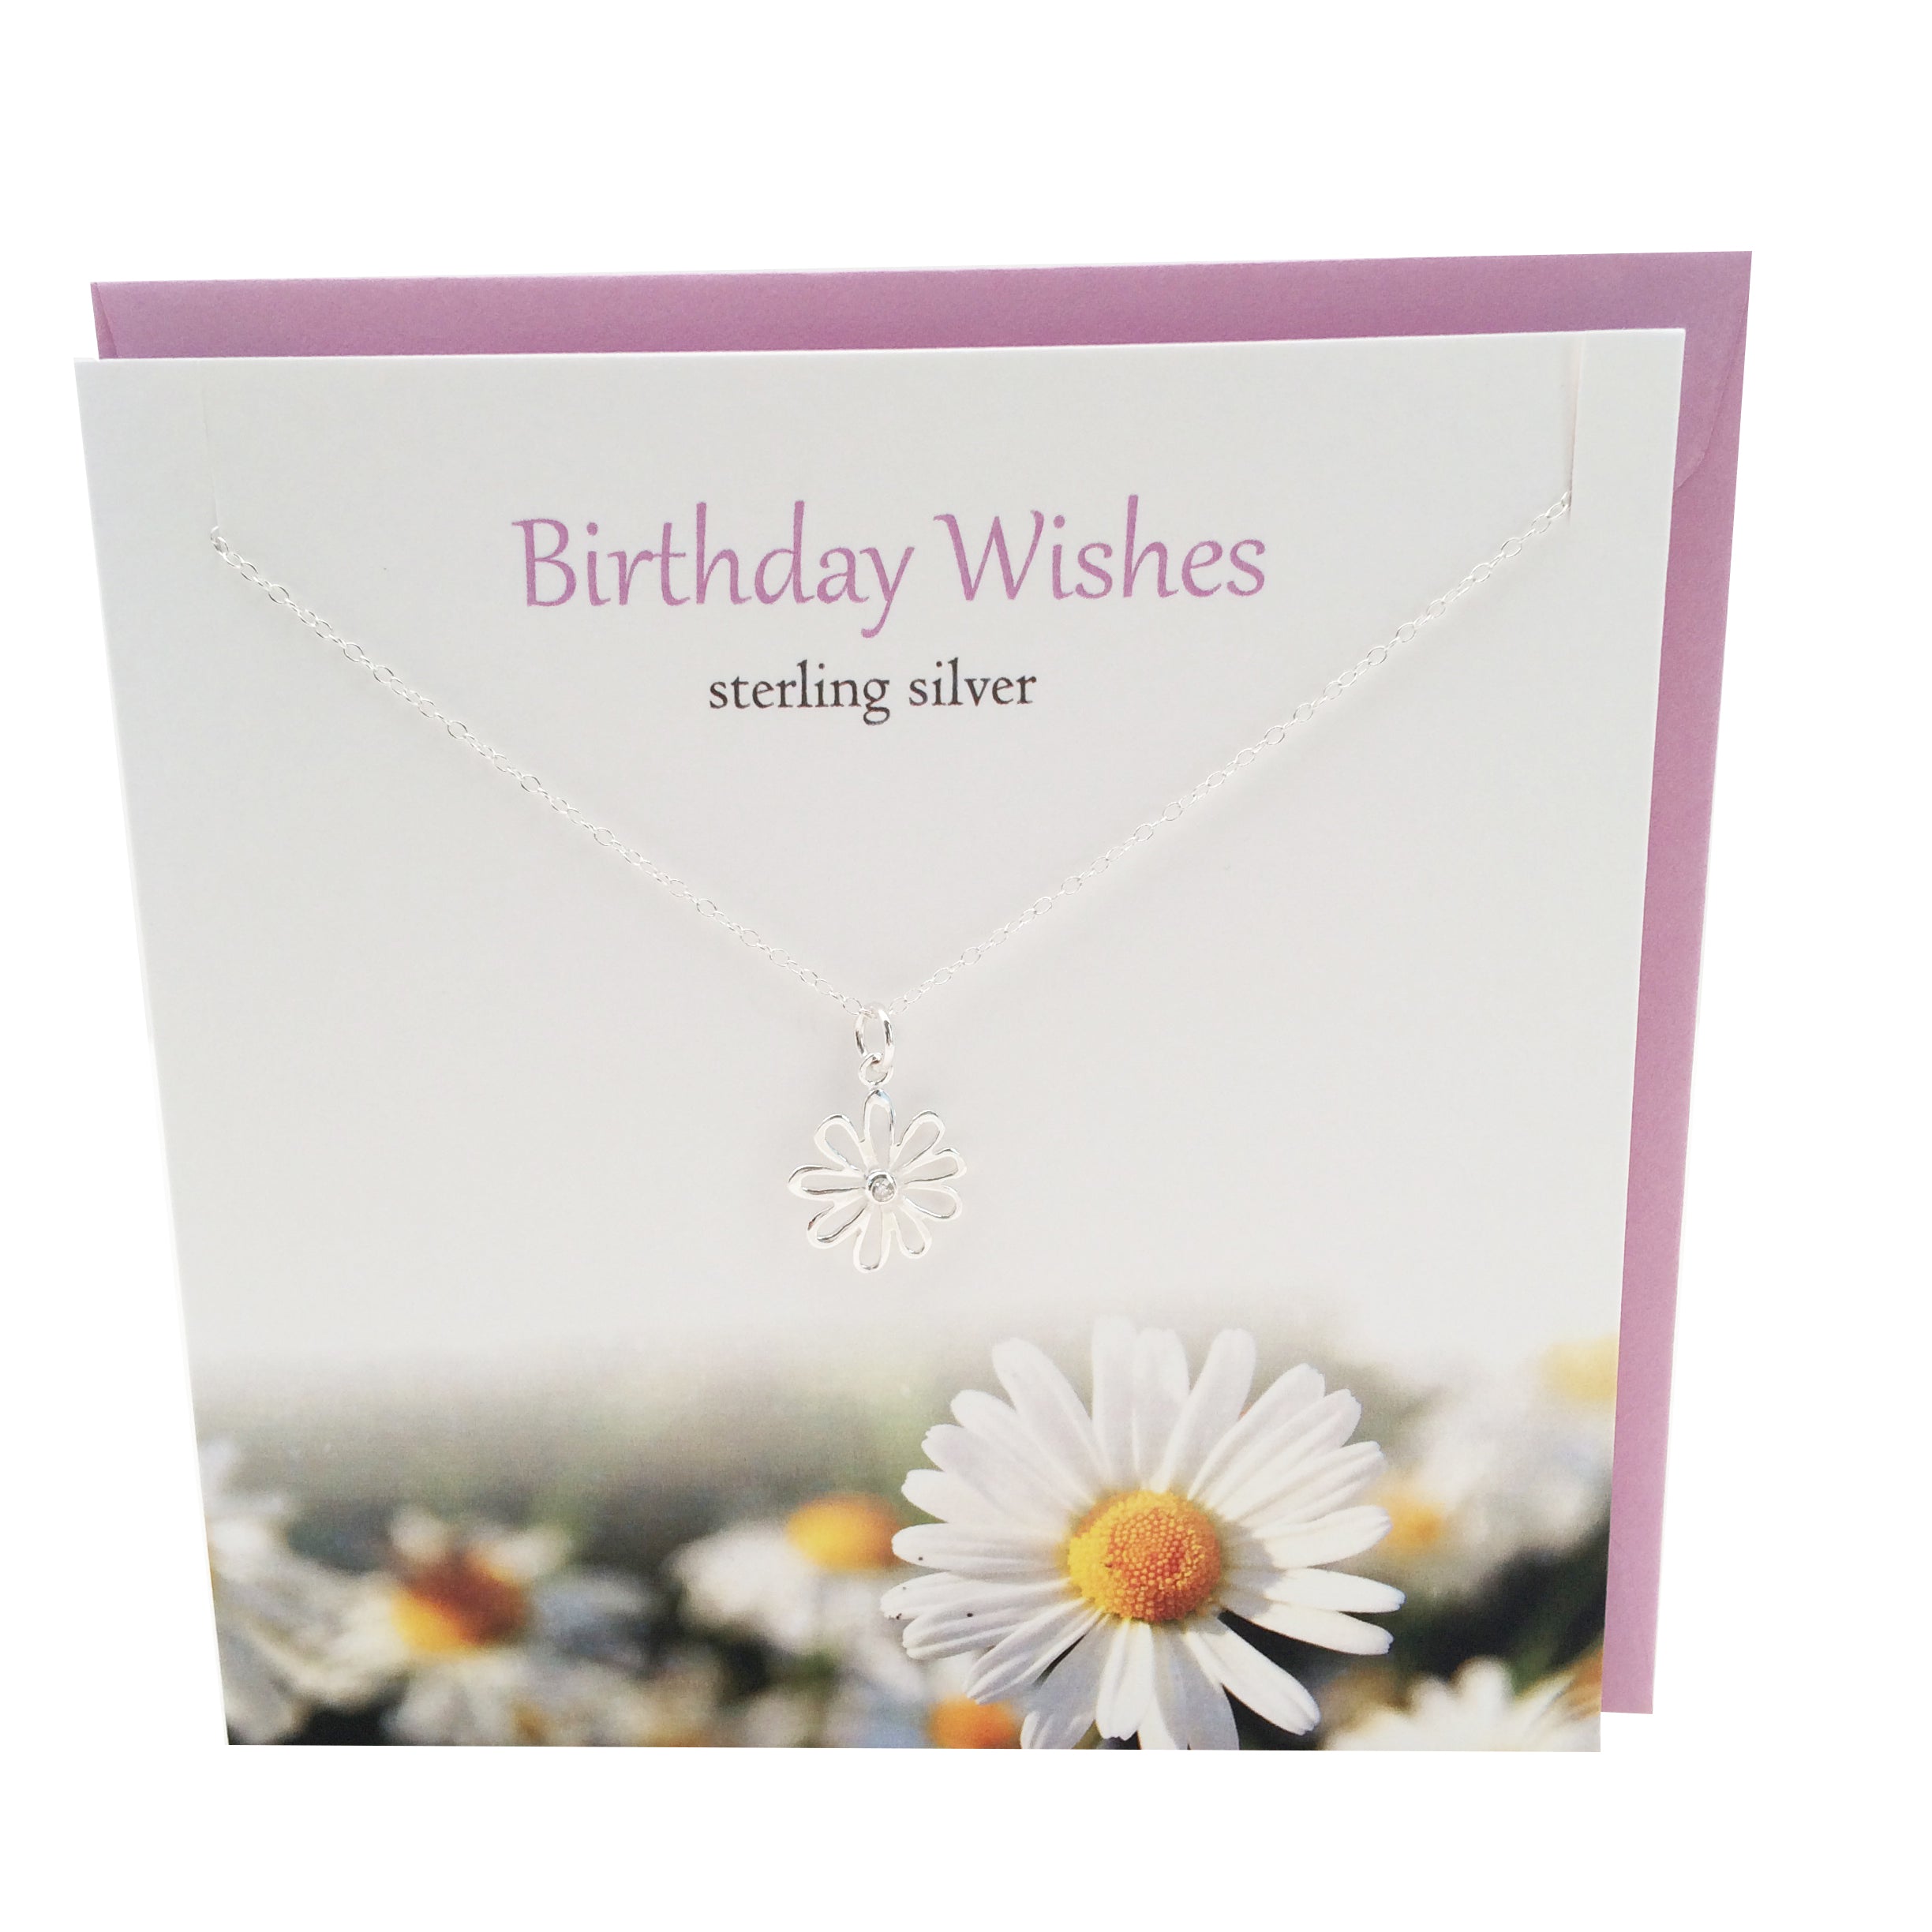 Birthday Wishes Daisy silver necklace | The Silver Studio Scotland